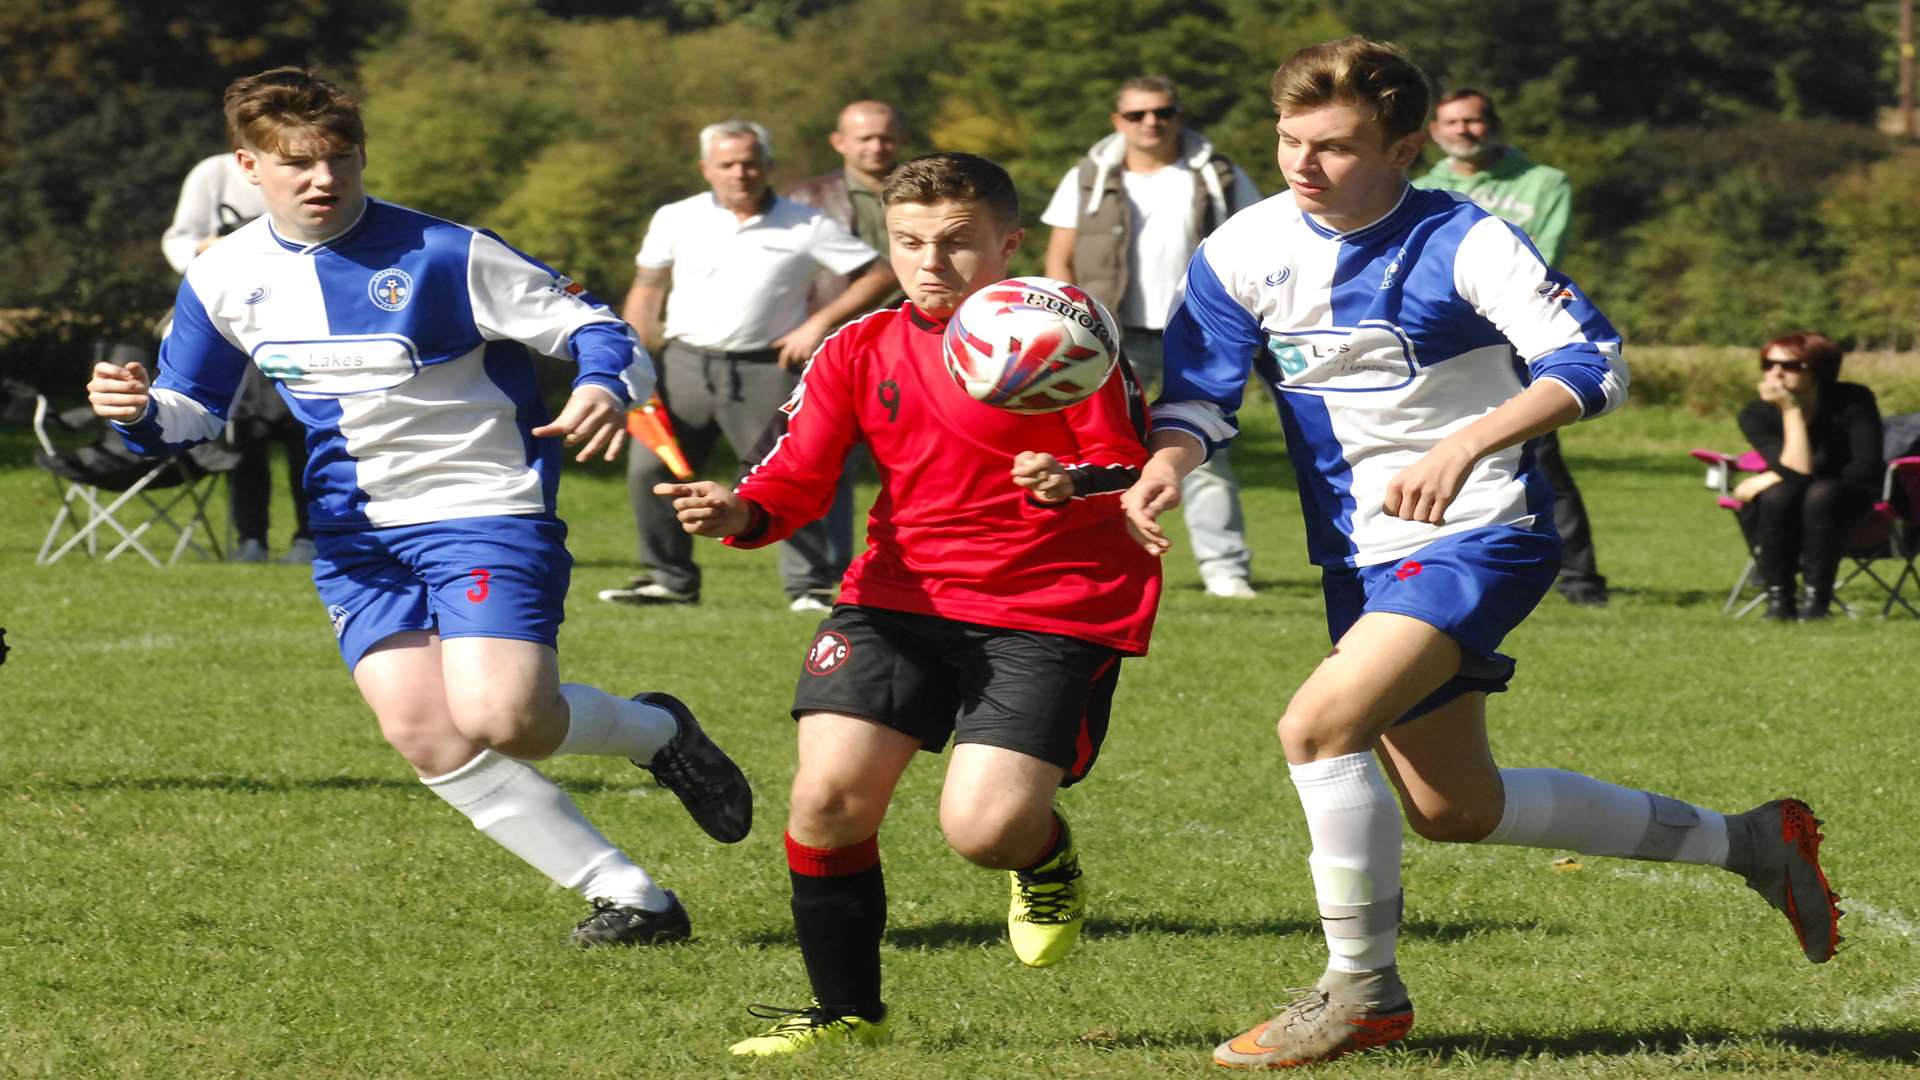 Rainham Kenilworth under-16s, red, in action against Bredhurst Juniors under-16s. Picture: Chris Davey